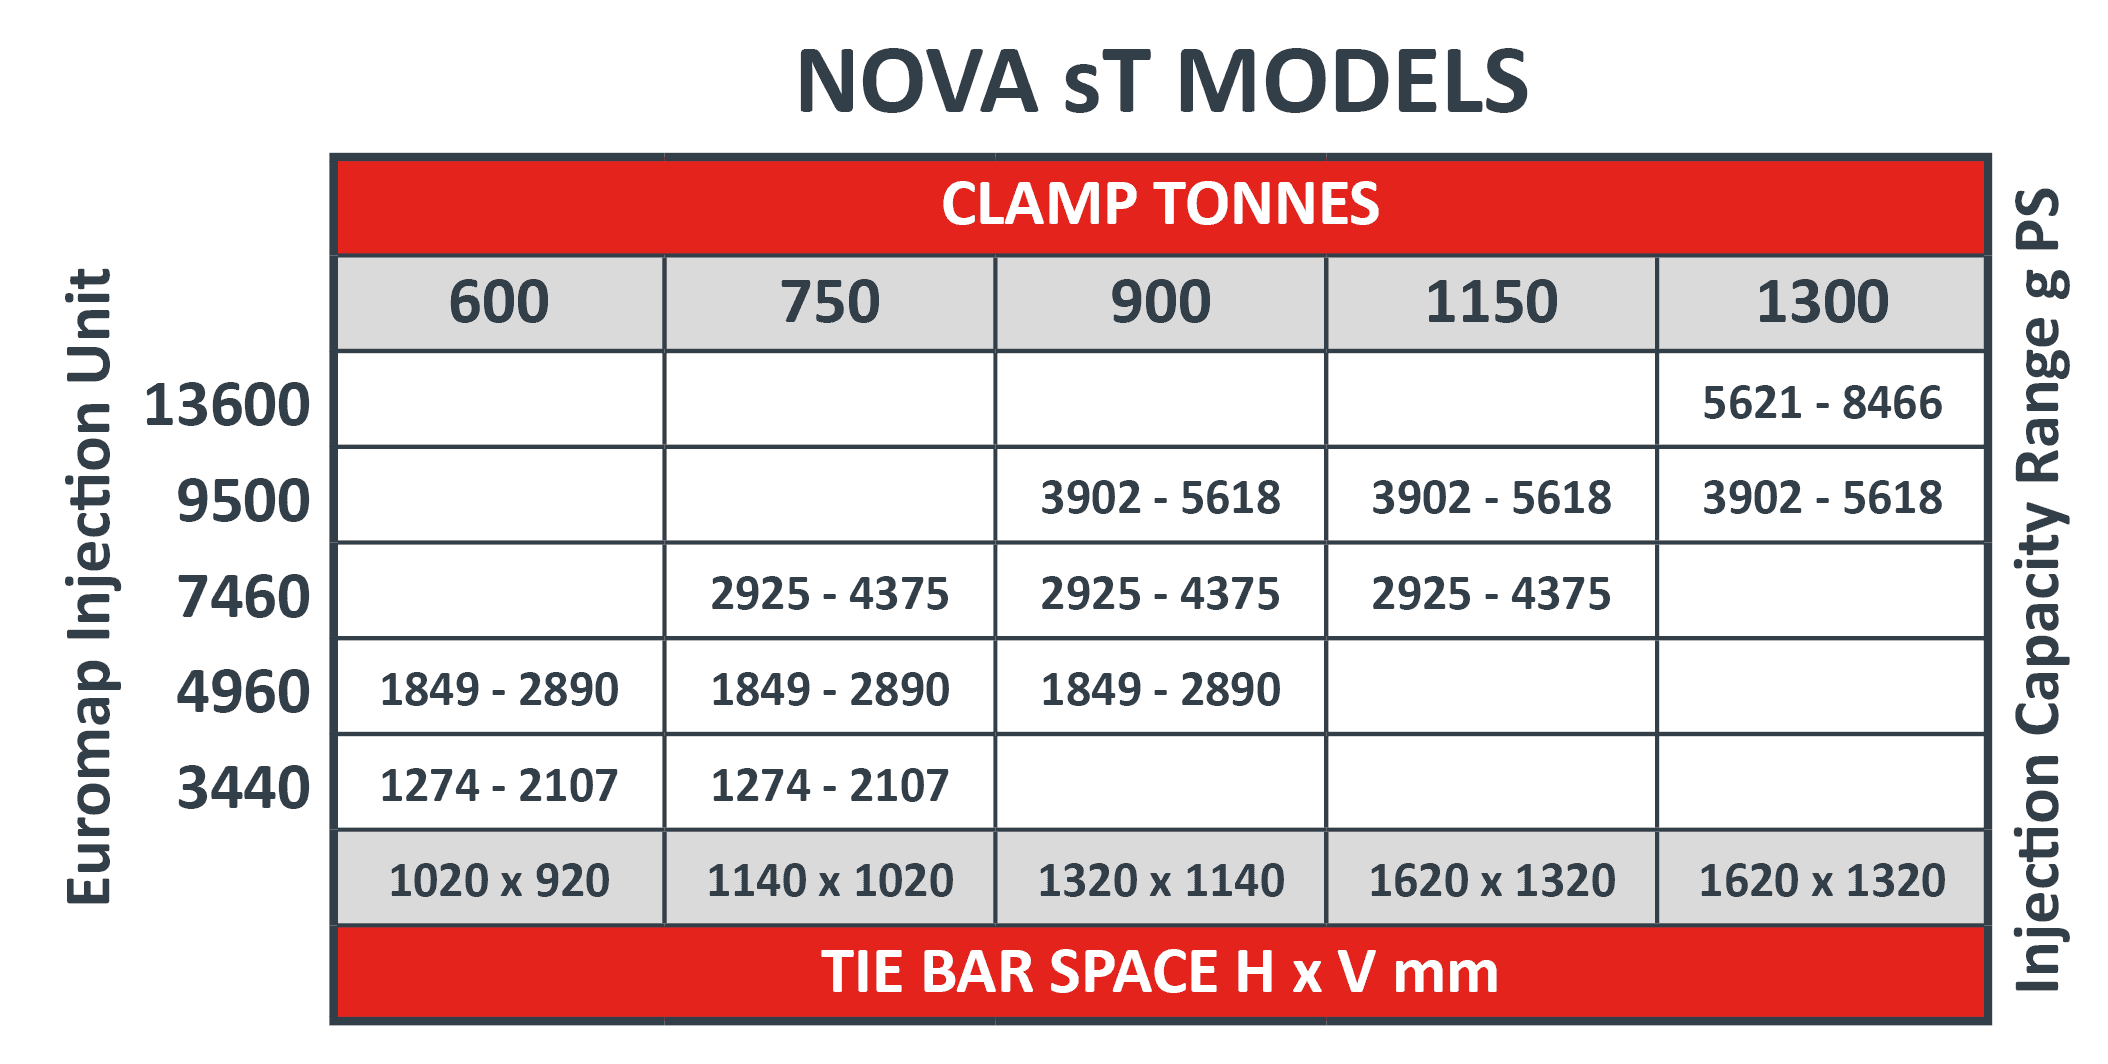 NOVA sT Servo Hydraulic Injection Moulding Machine models specification sheet